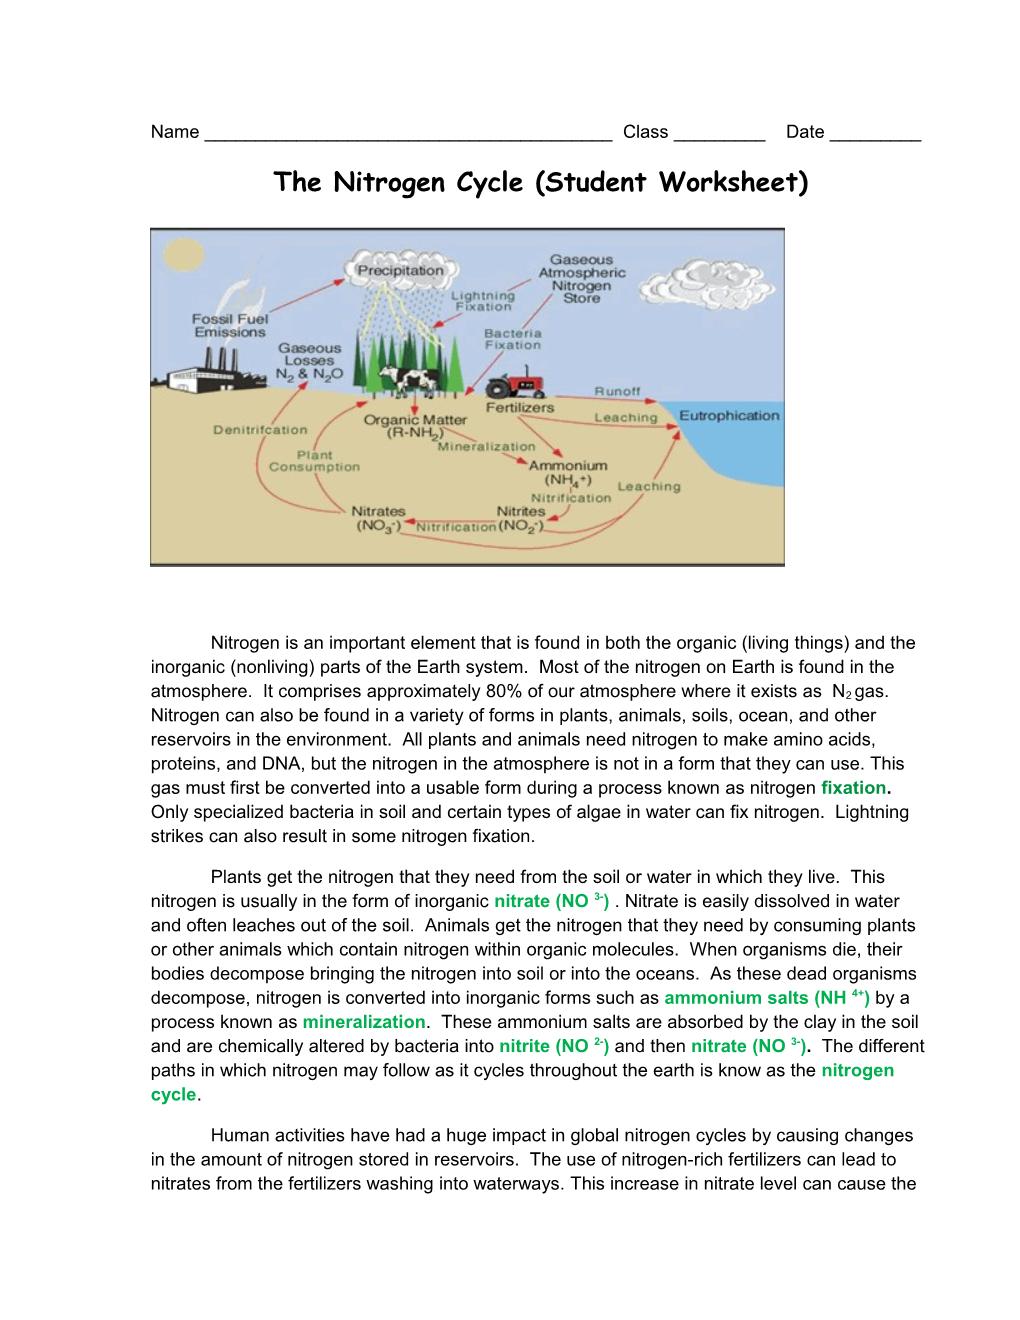 The Nitrogren Cycle (Student Worksheet)